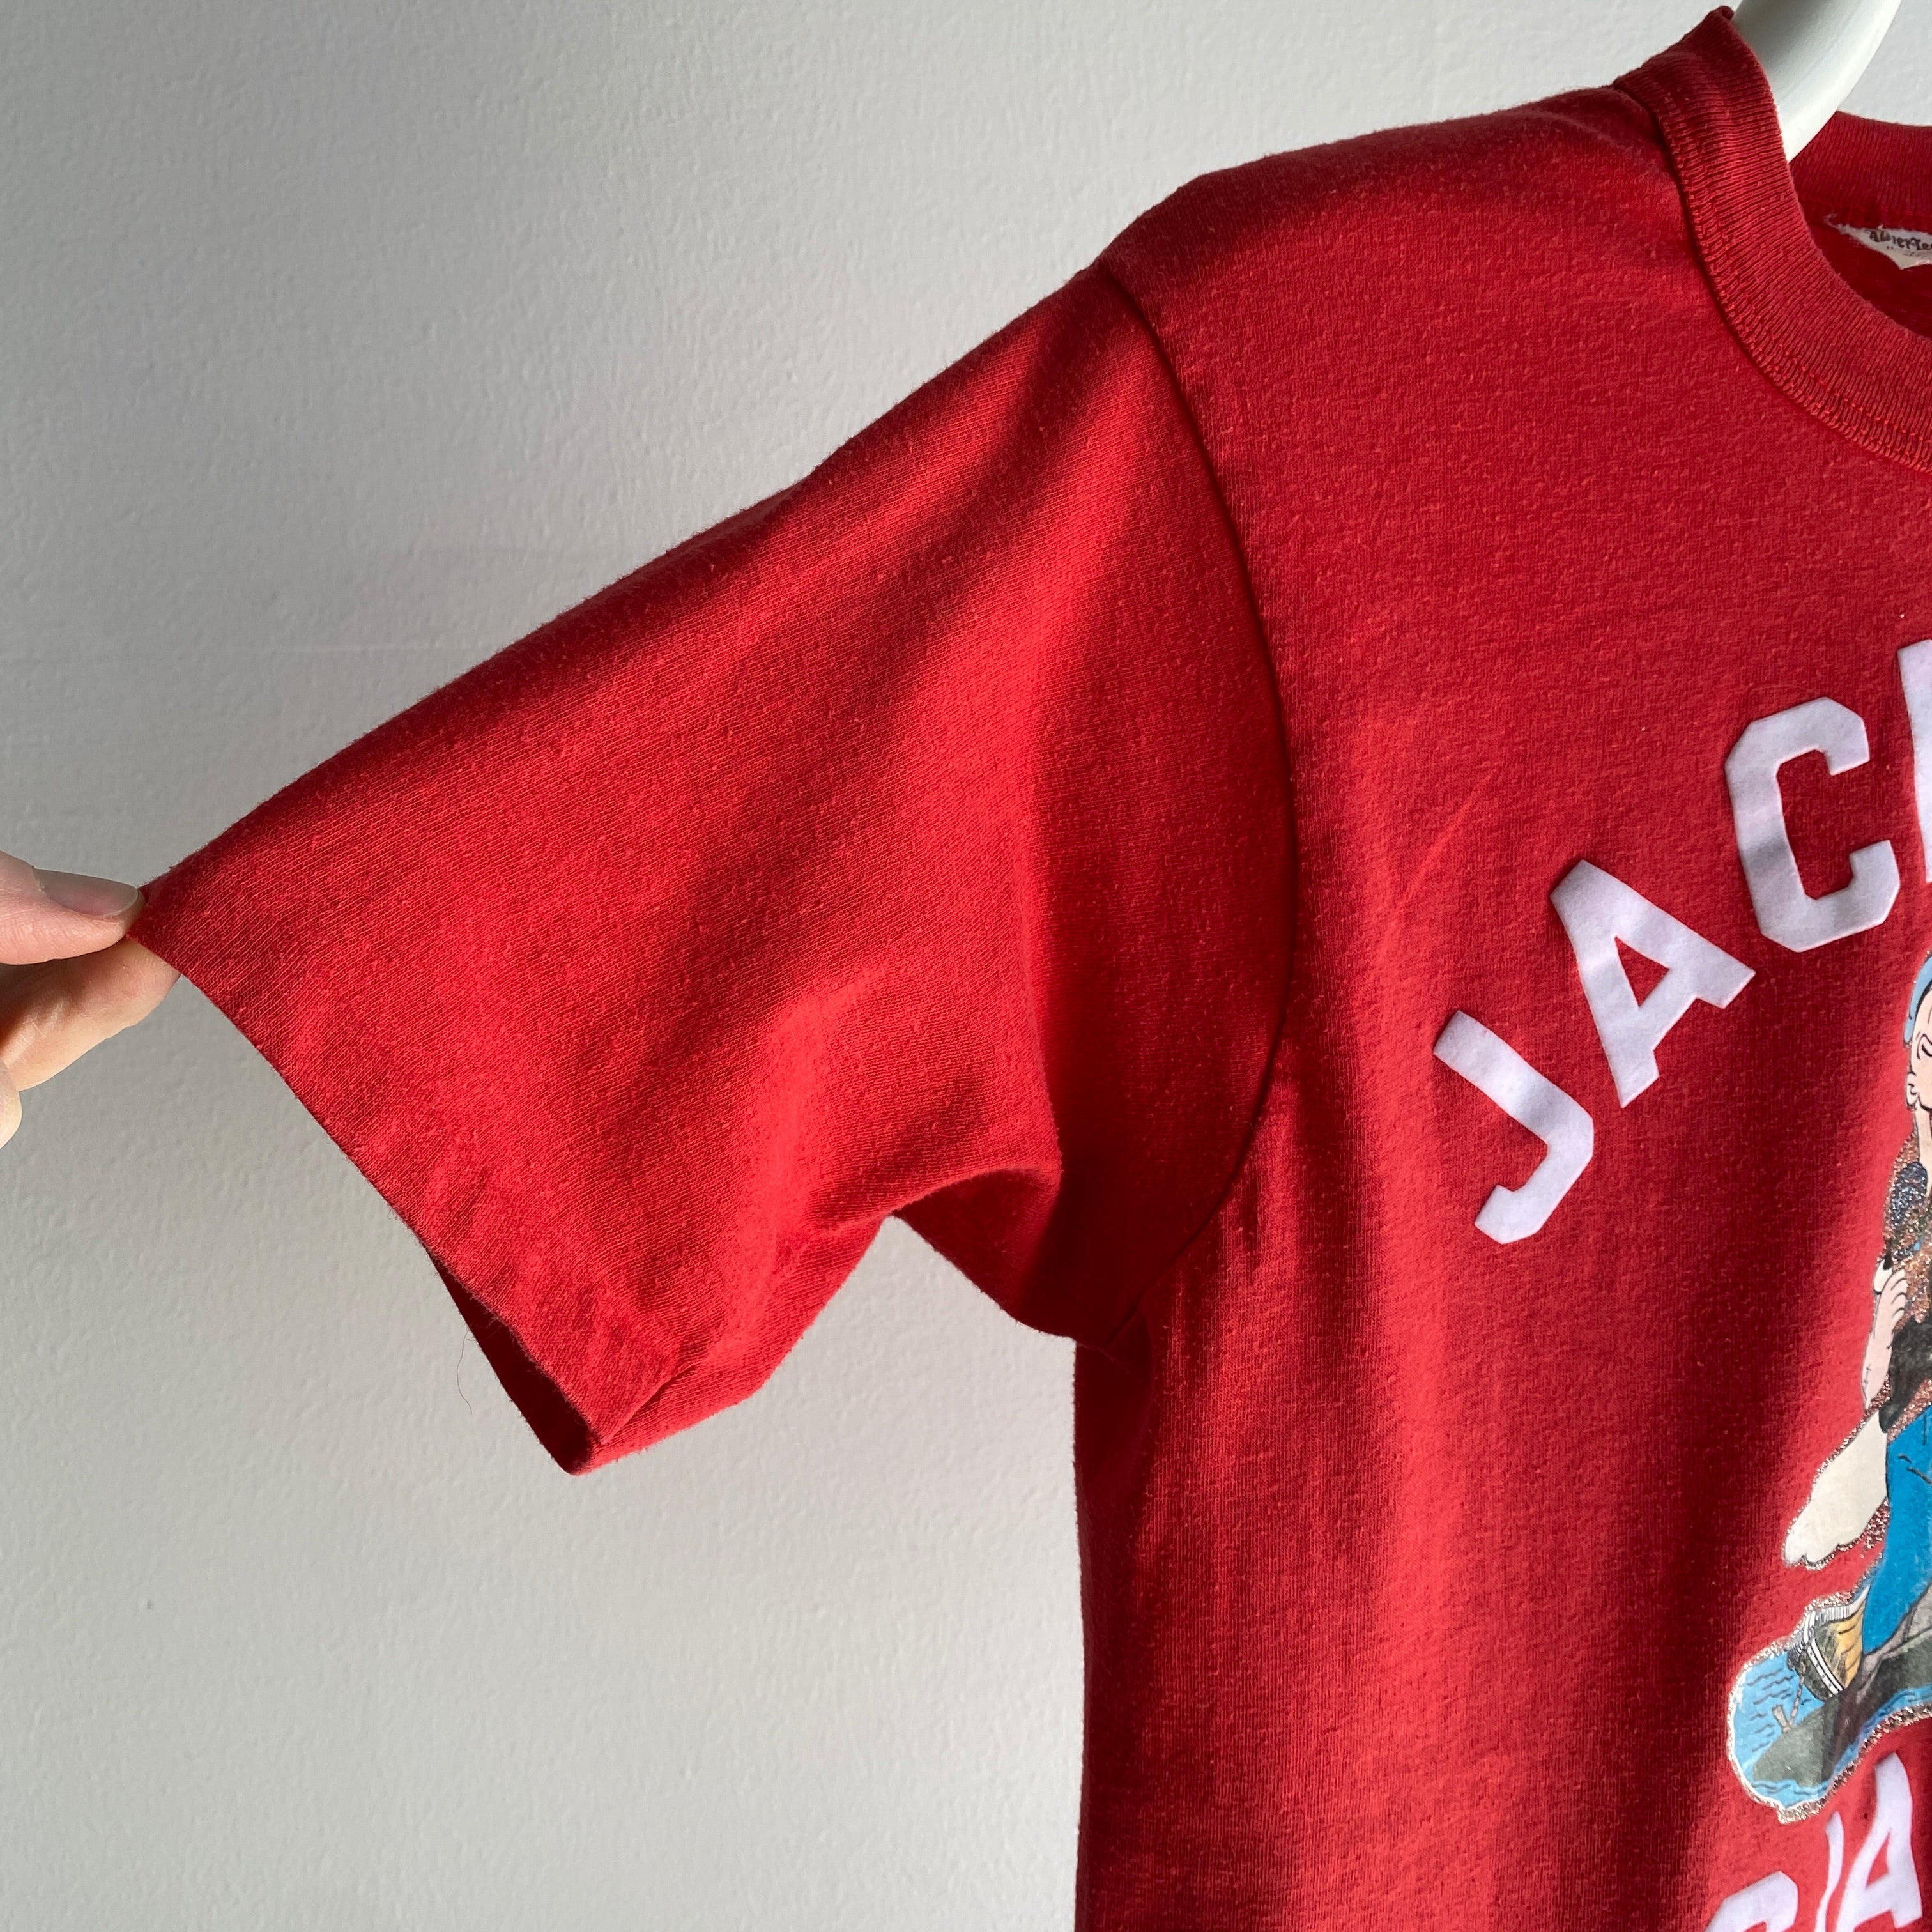 1979 Bizarre Popeye DIY Jack Le T-shirt Tueur Géant